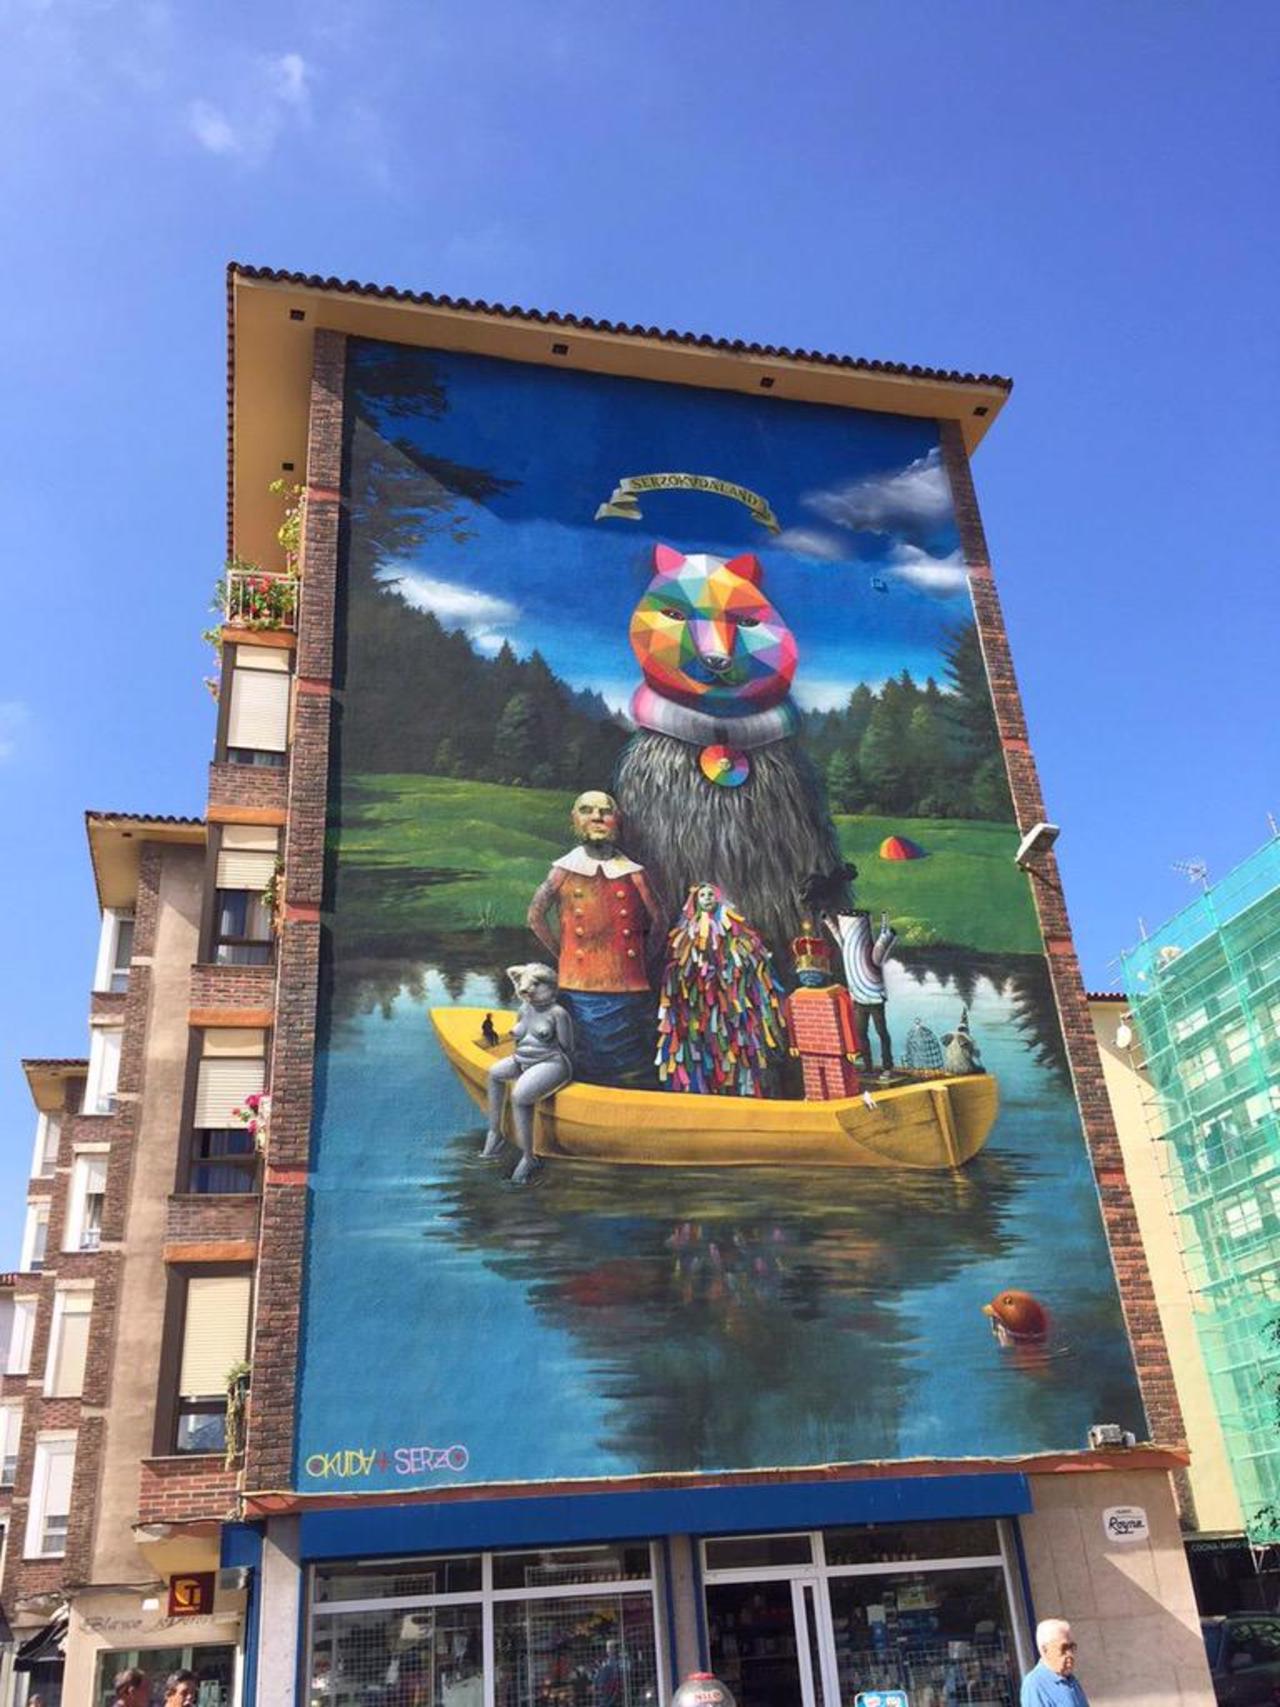 #Okuda & #Serzo #switch a wall into a #mural in #Santander, #Spain #streetart #switch #graffiti #bedifferent #arte http://t.co/vzvKmgeTAs